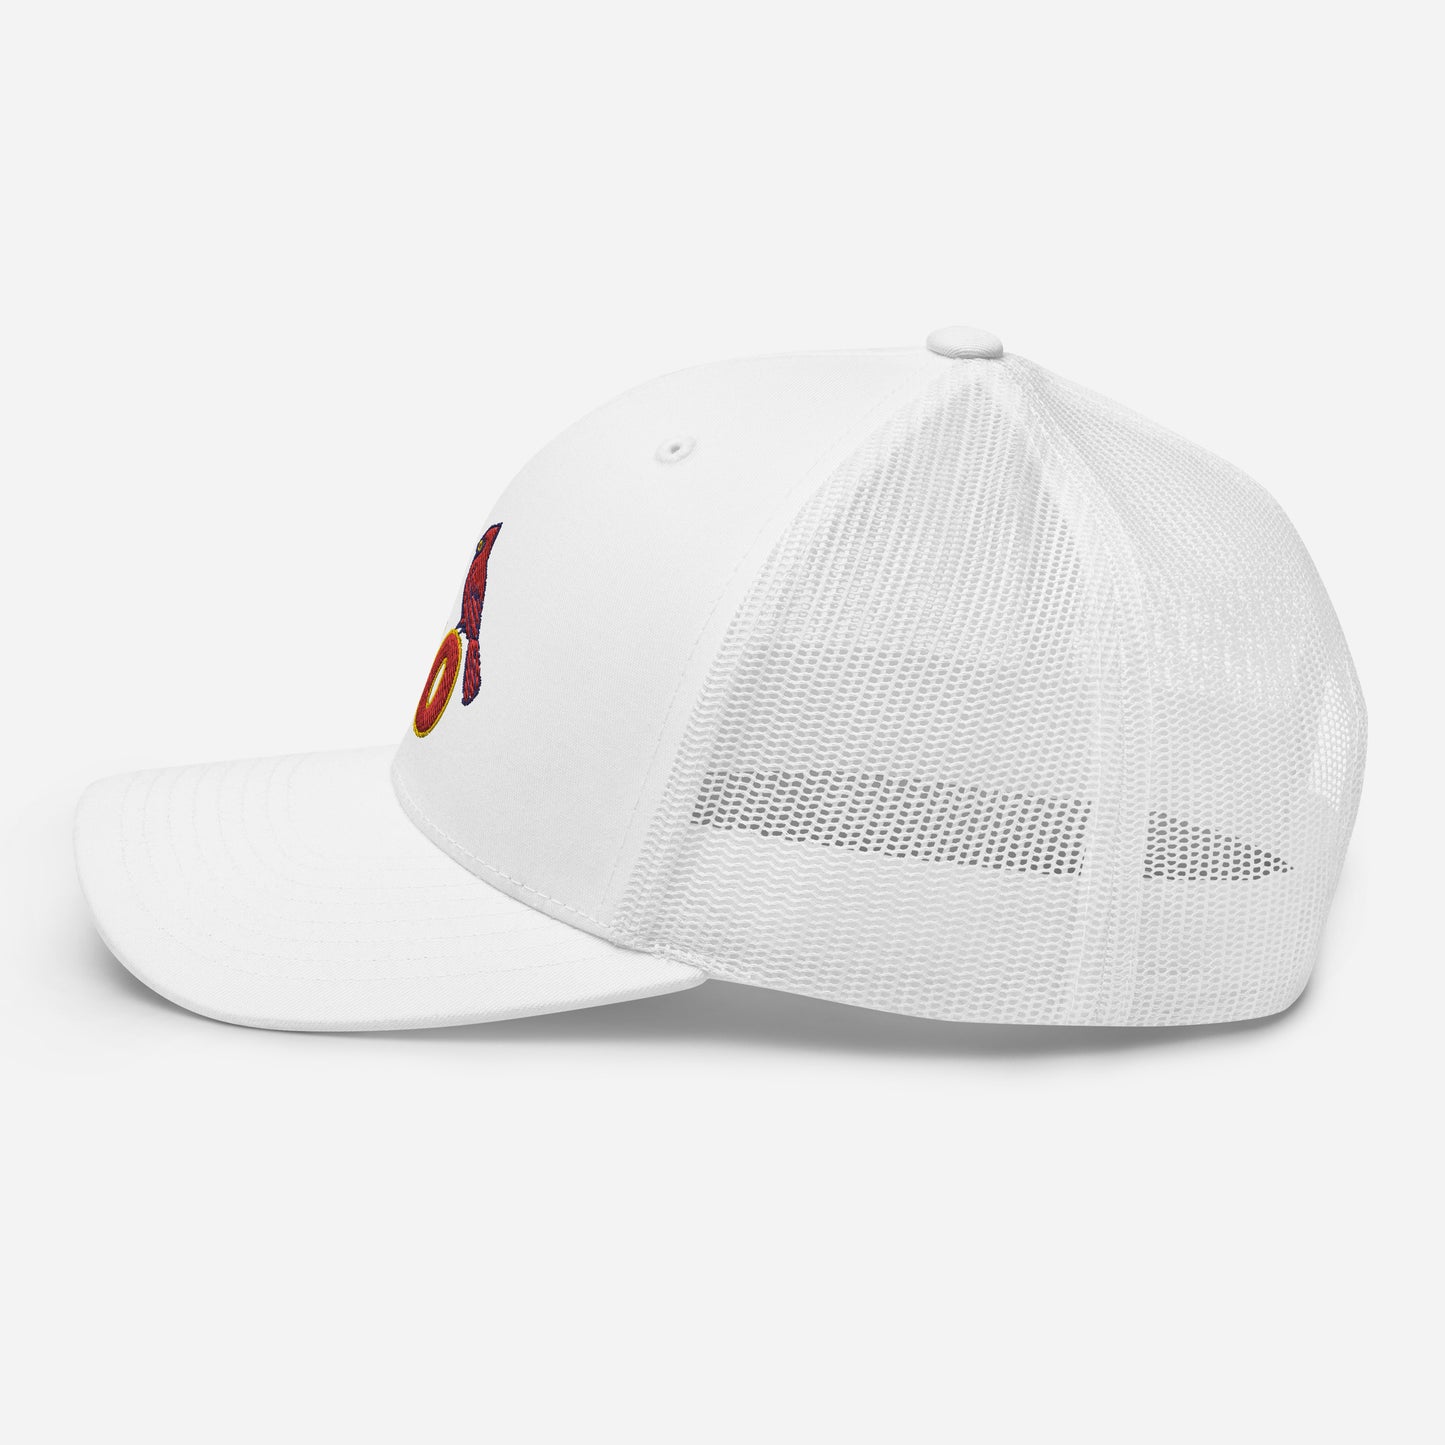 Adam Wainwright Hat / Waino Hat / St. Louis Cardinals Trucker Cap